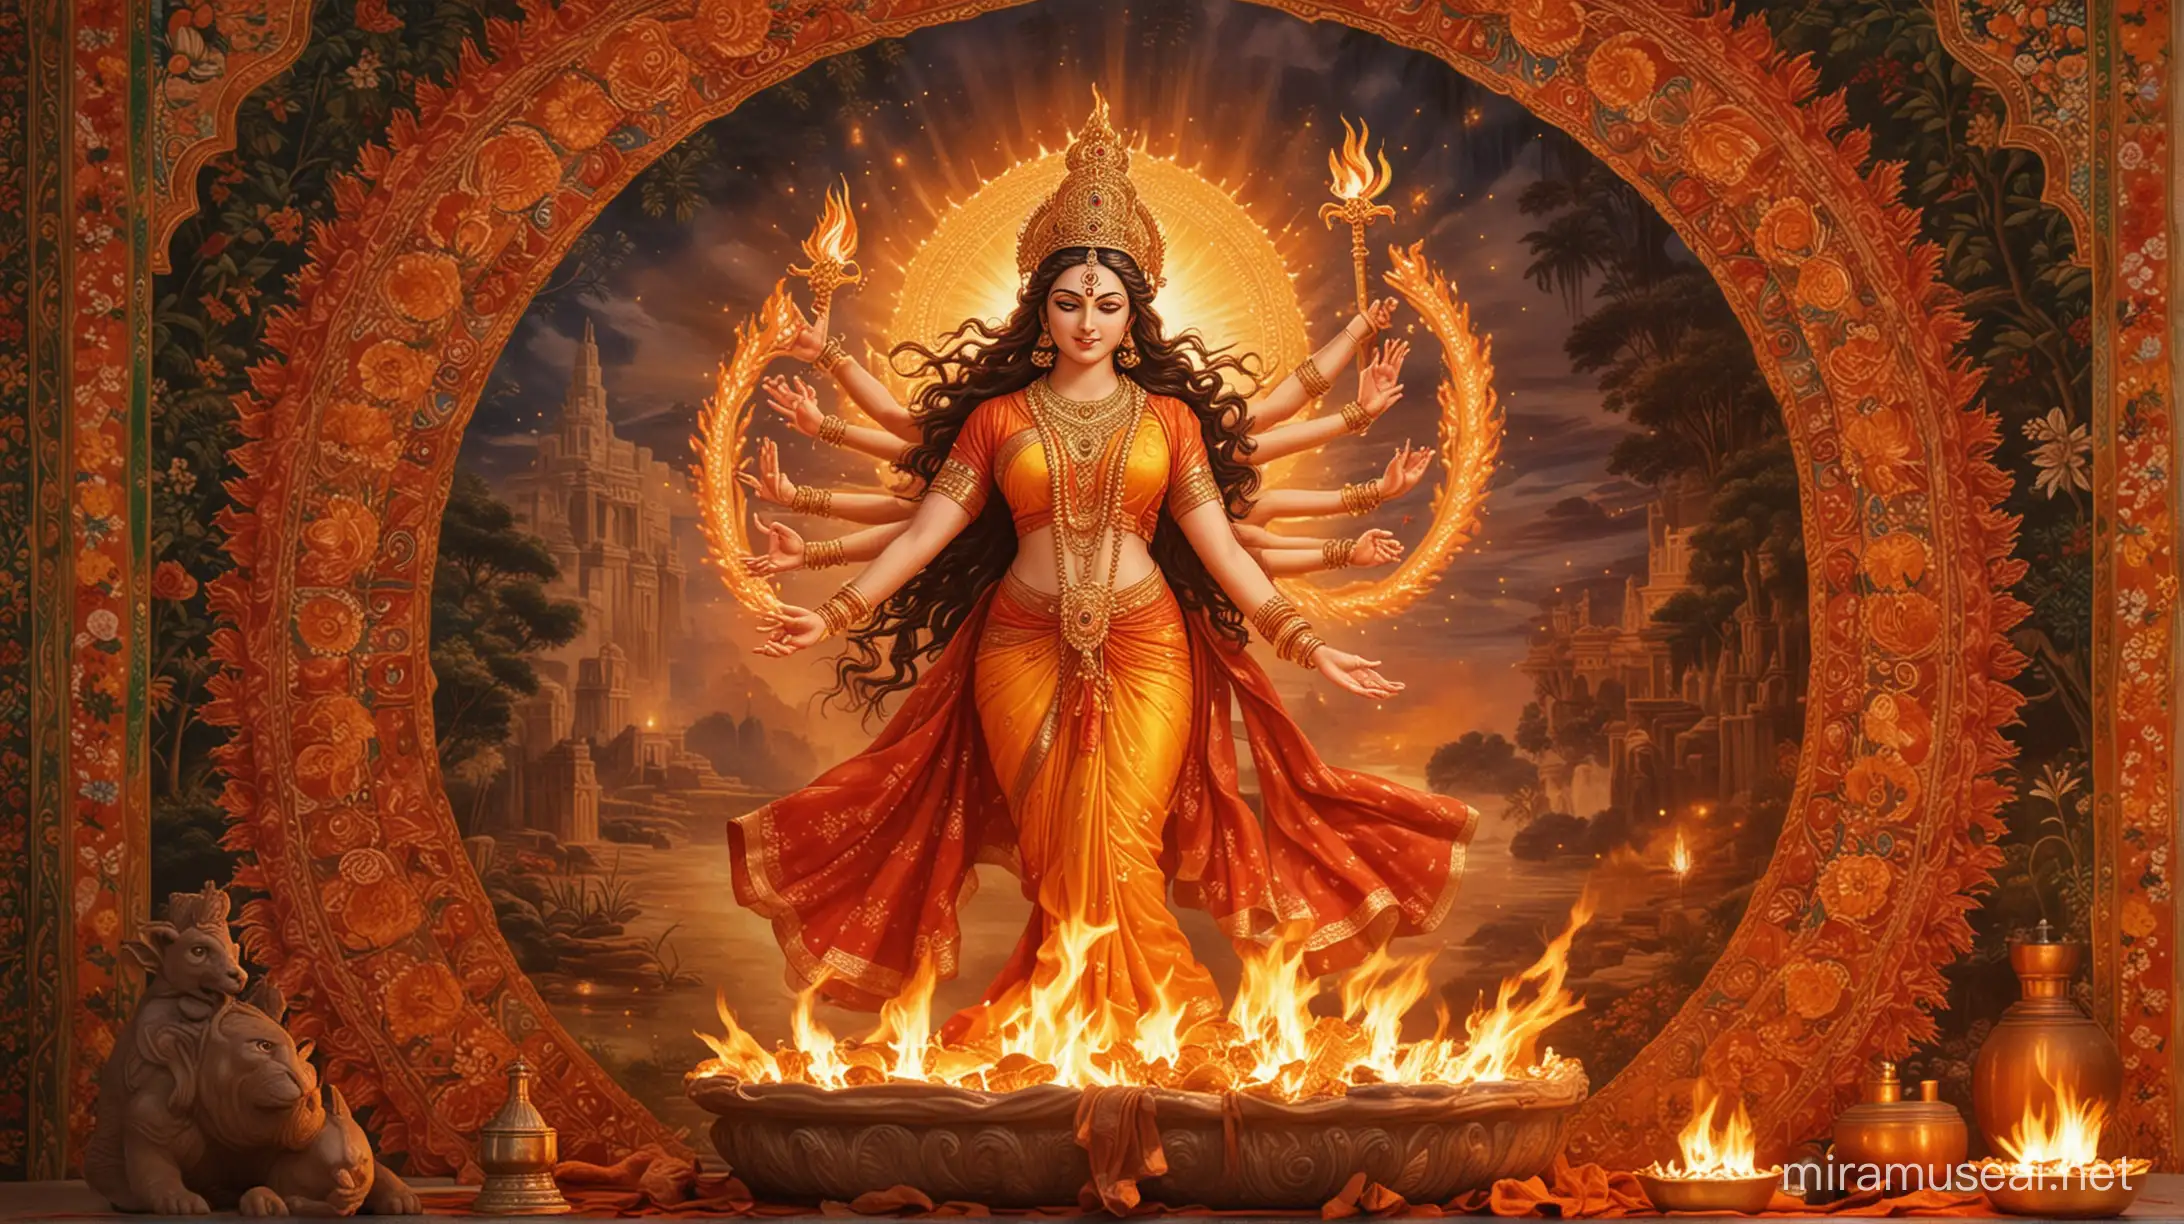 Goddess Durga Embraced by Dawns Serene Flames